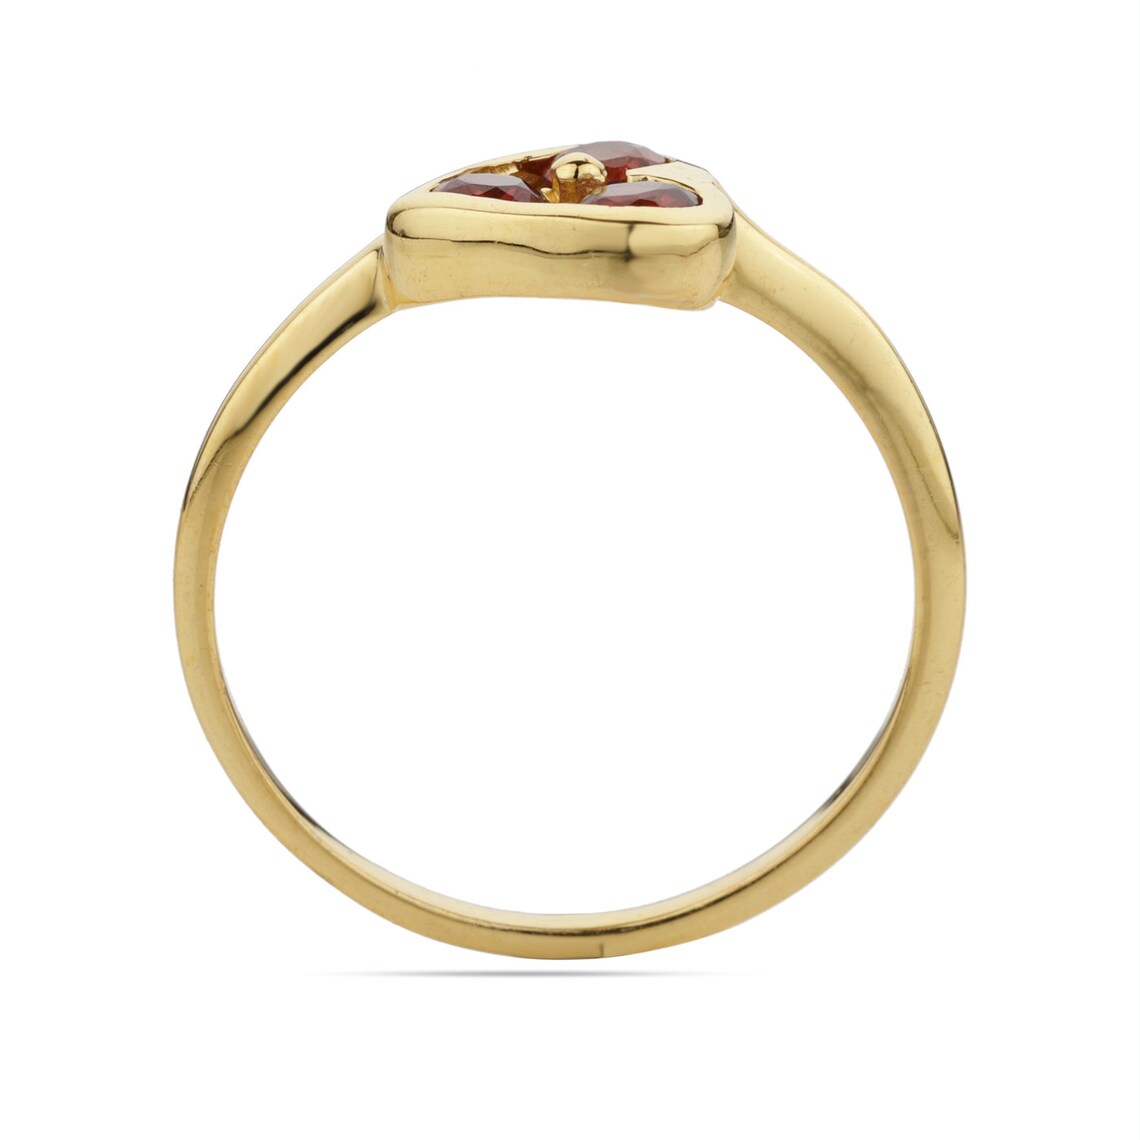 Round Garnet Heart Ring - Gold Ring - January birthstone Ring - Minimalist Ring - Sterling Silver Ring